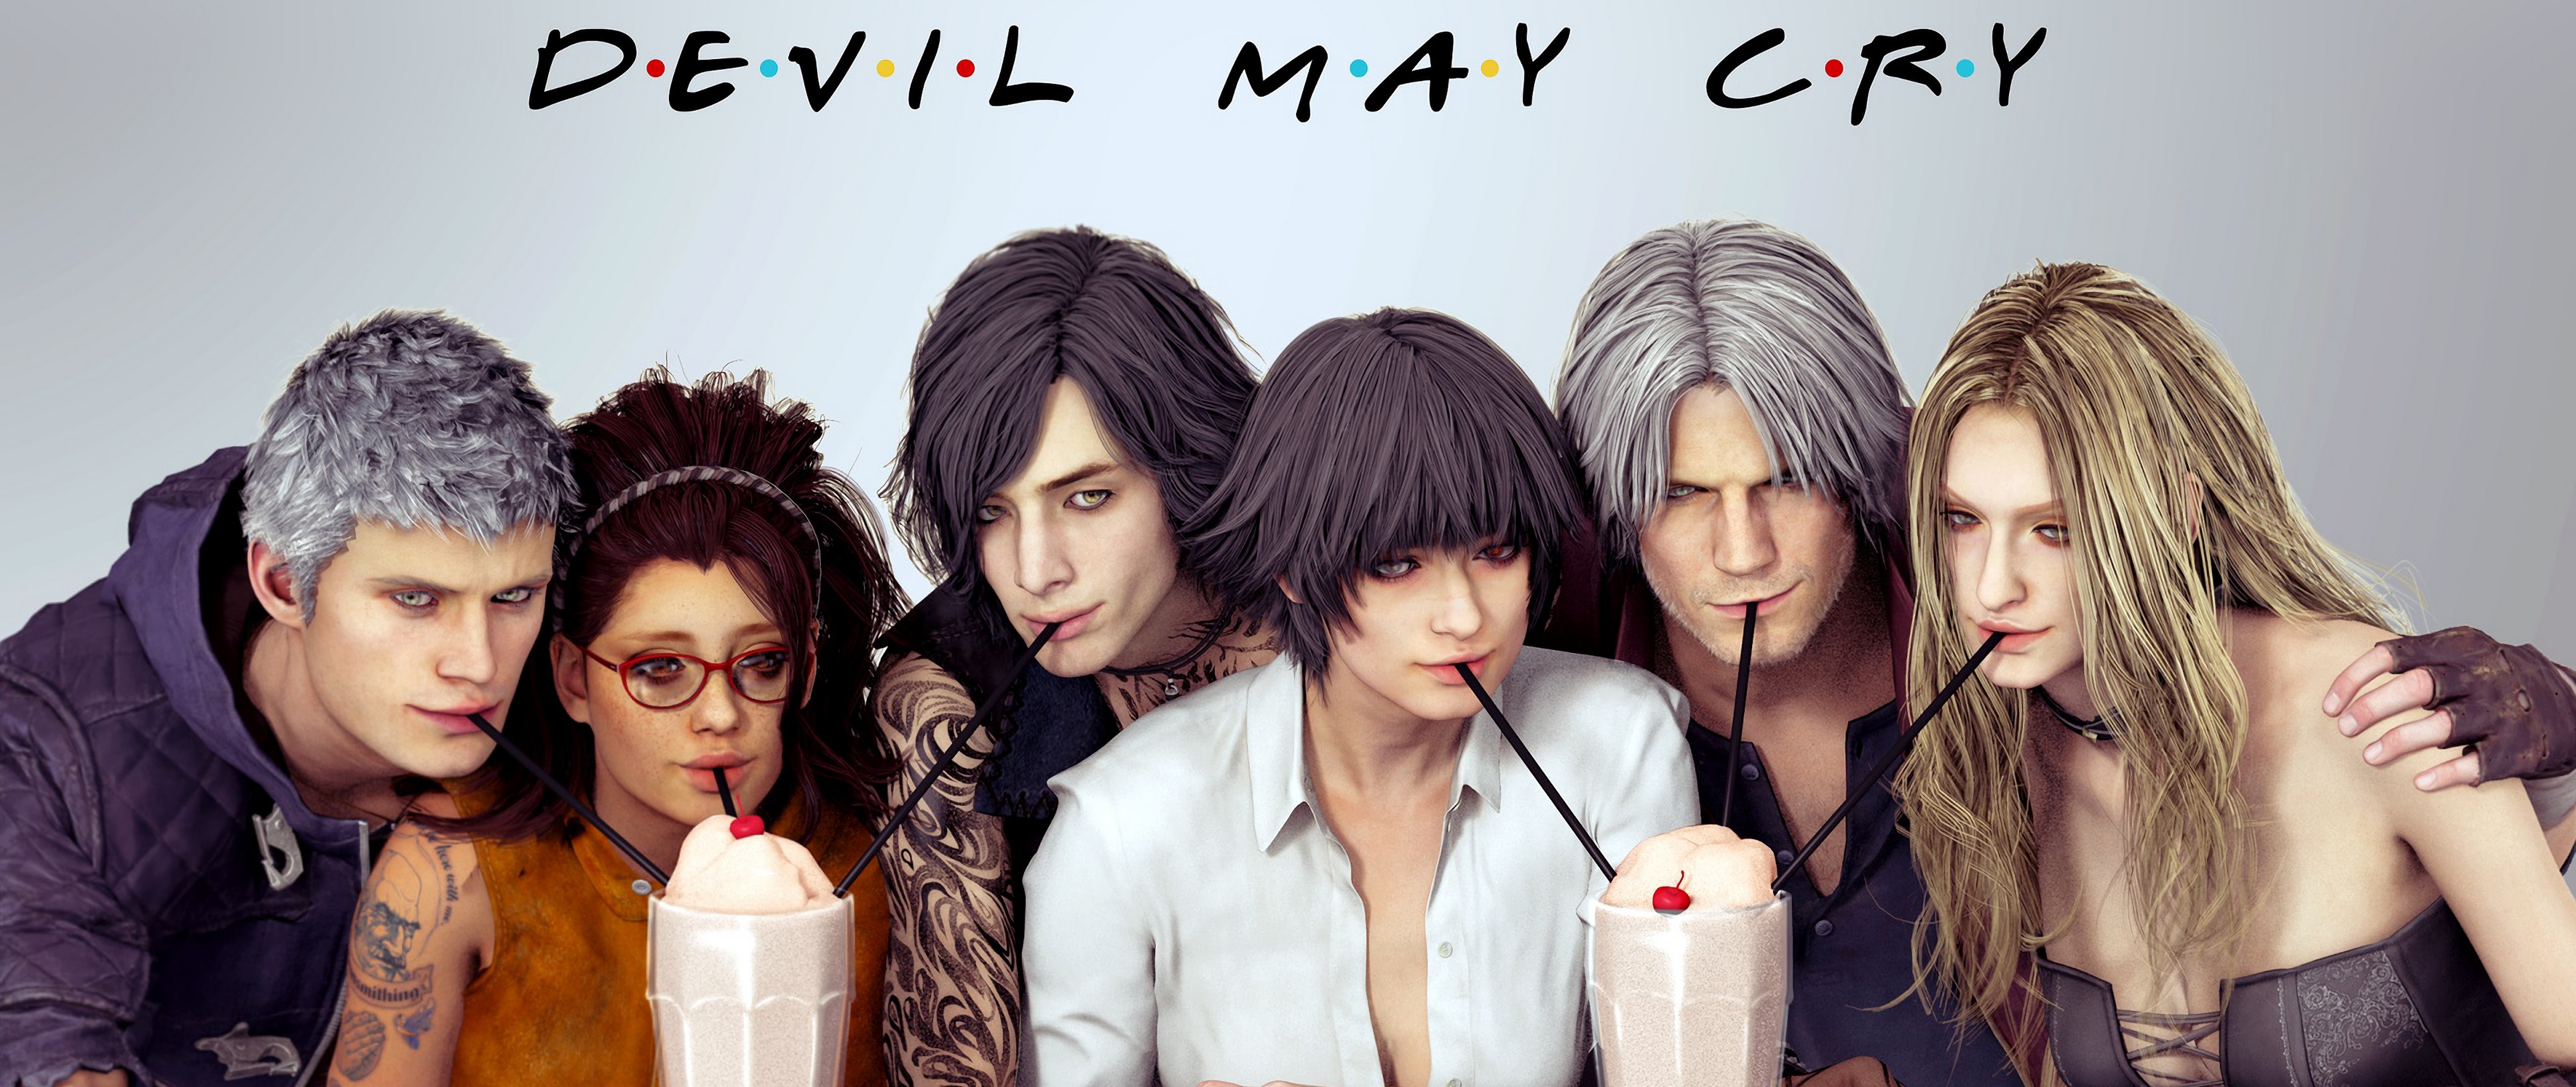 RSA now finally on BlueSky! on X: Devil May Cry 5 character headshots of  V, Dante, Trish, and Lady. #DMC5 #DevilMayCry5 #DevilmayCry   / X